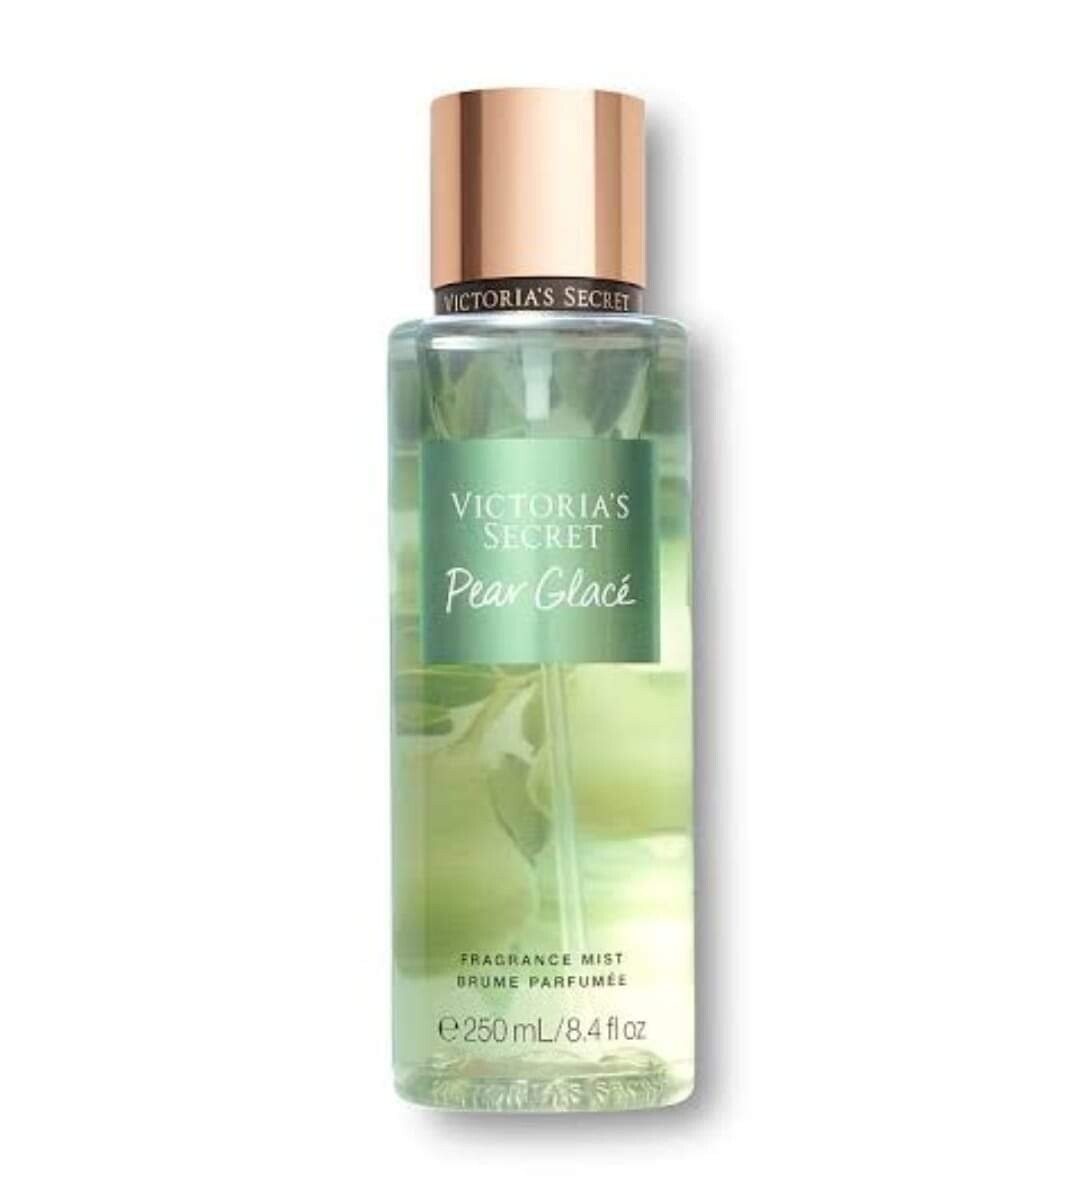 Victoria's Secret Fragrance Mist
Pear Glace